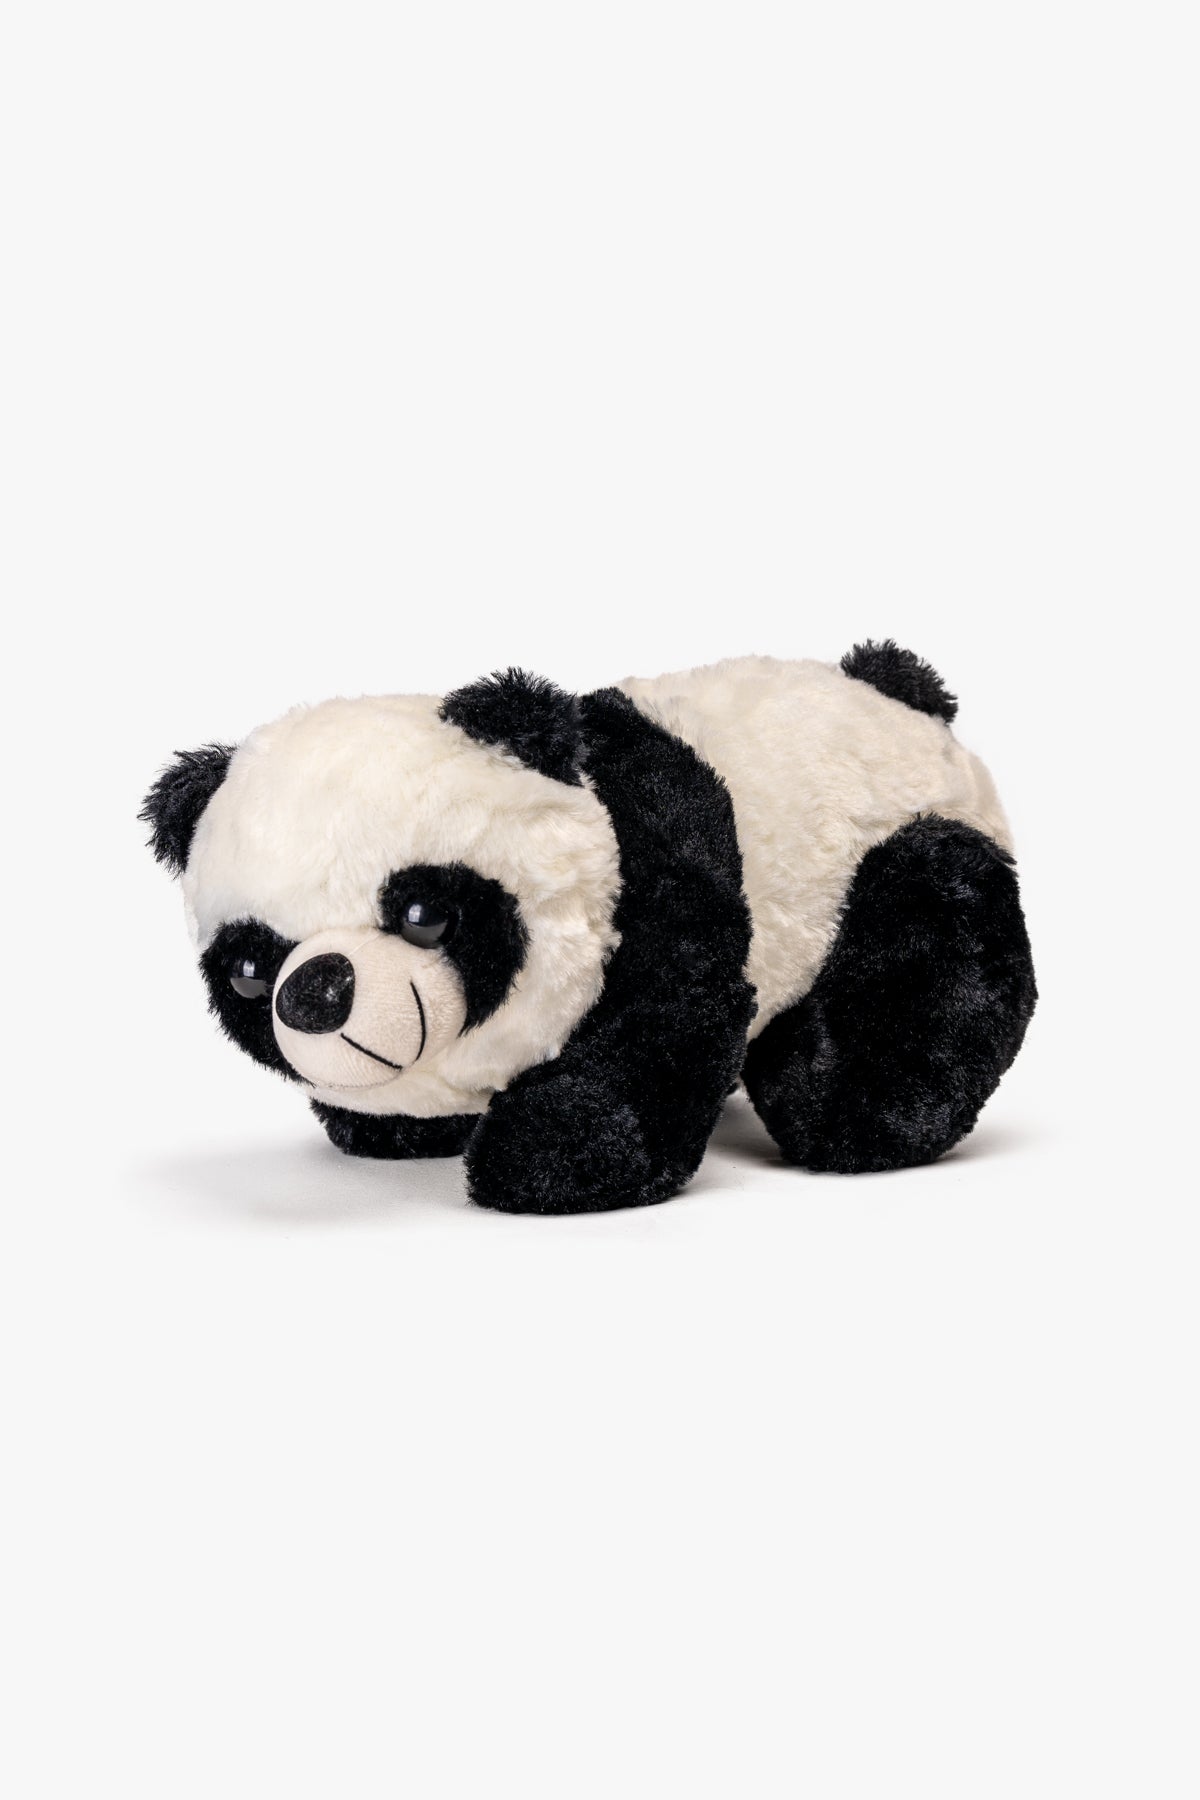 Peluche Panda Blanco 15cm Chinitown Chinitown